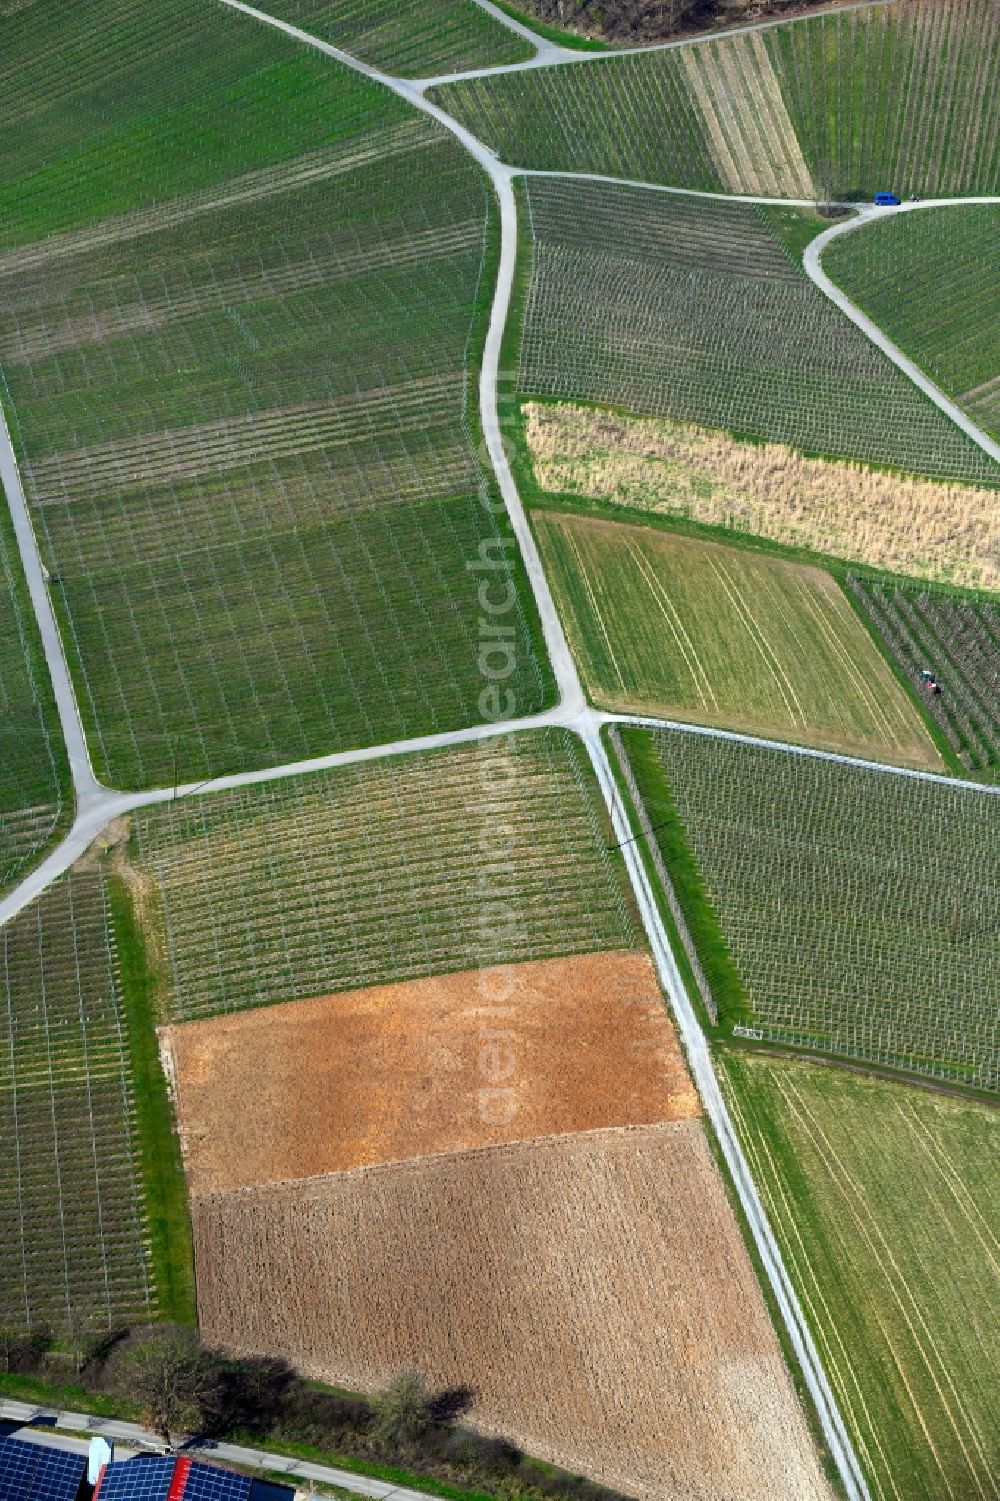 Siebeneich from the bird's eye view: Fields of wine cultivation landscape in Siebeneich in the state Baden-Wurttemberg, Germany